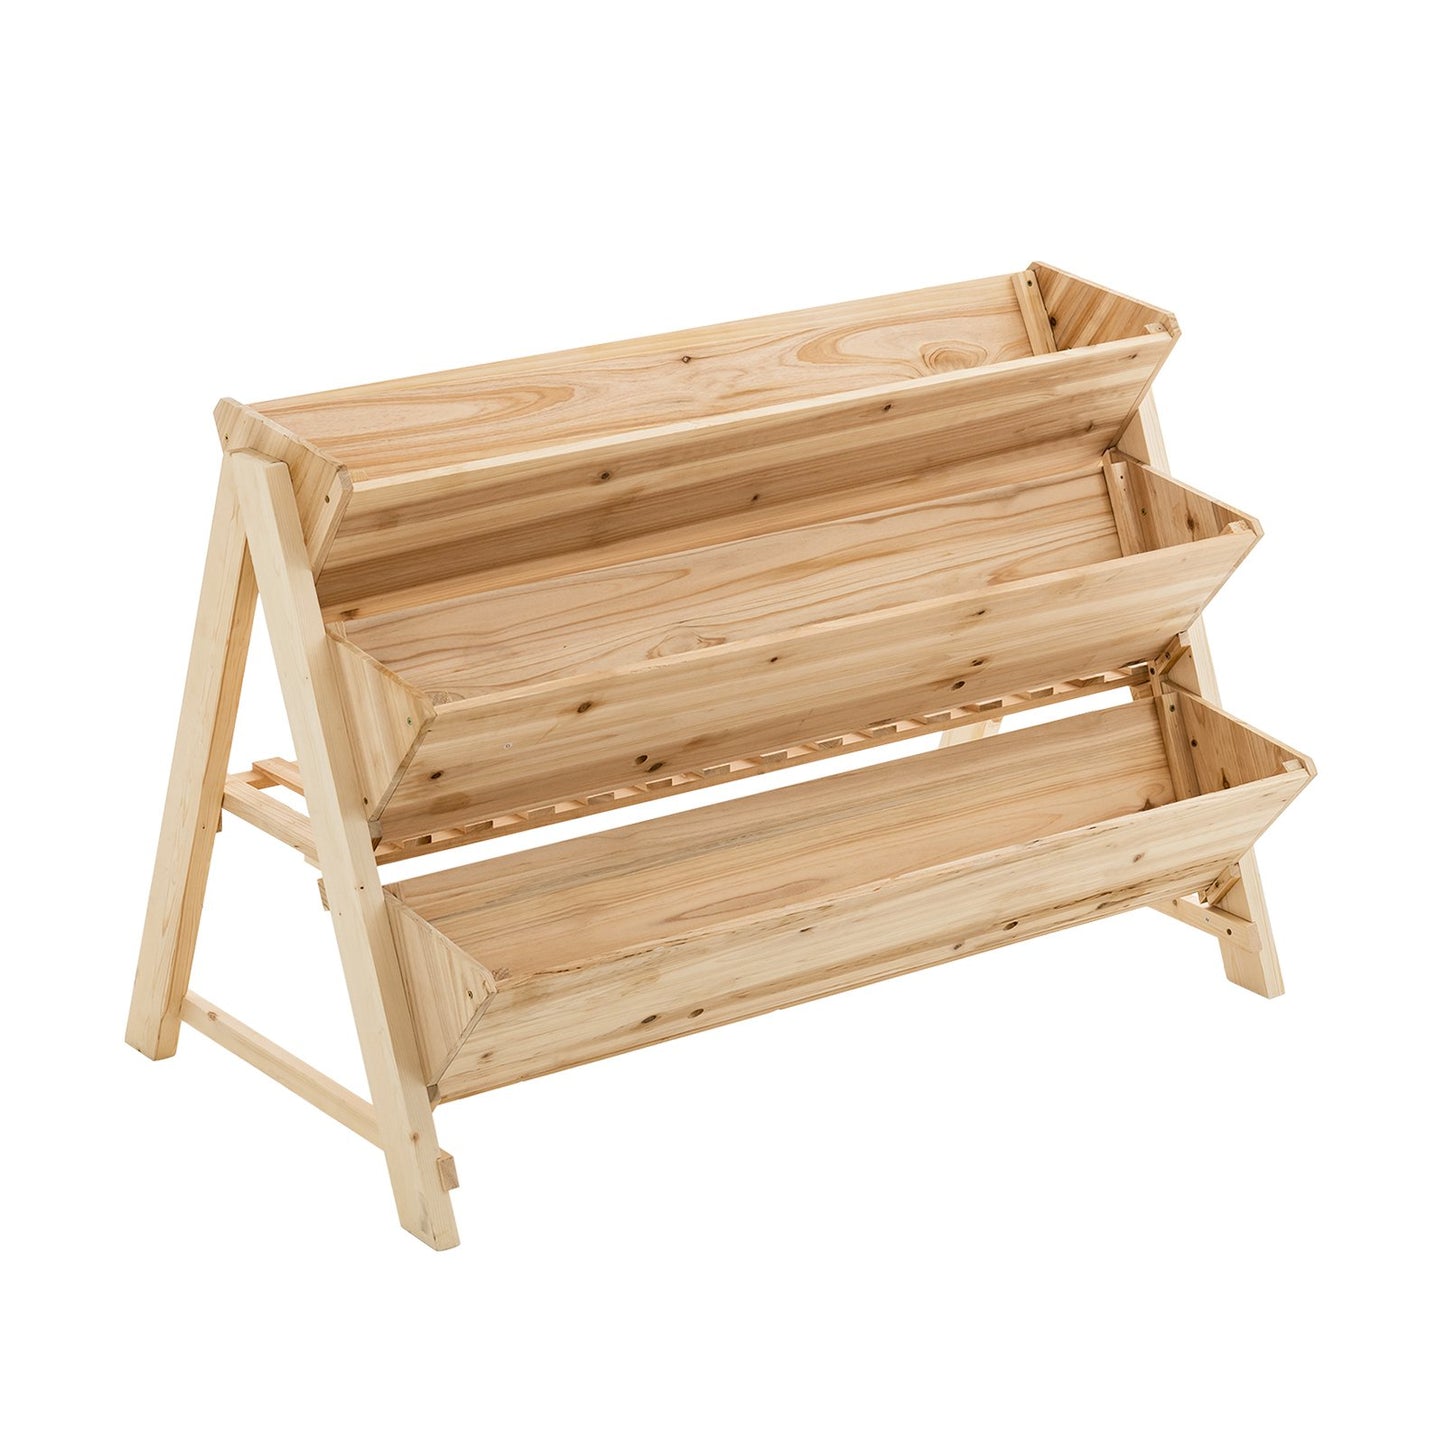 3 Tier Wooden Vertical Raised Garden Bed with Storage Shelf, Natural - Gallery Canada